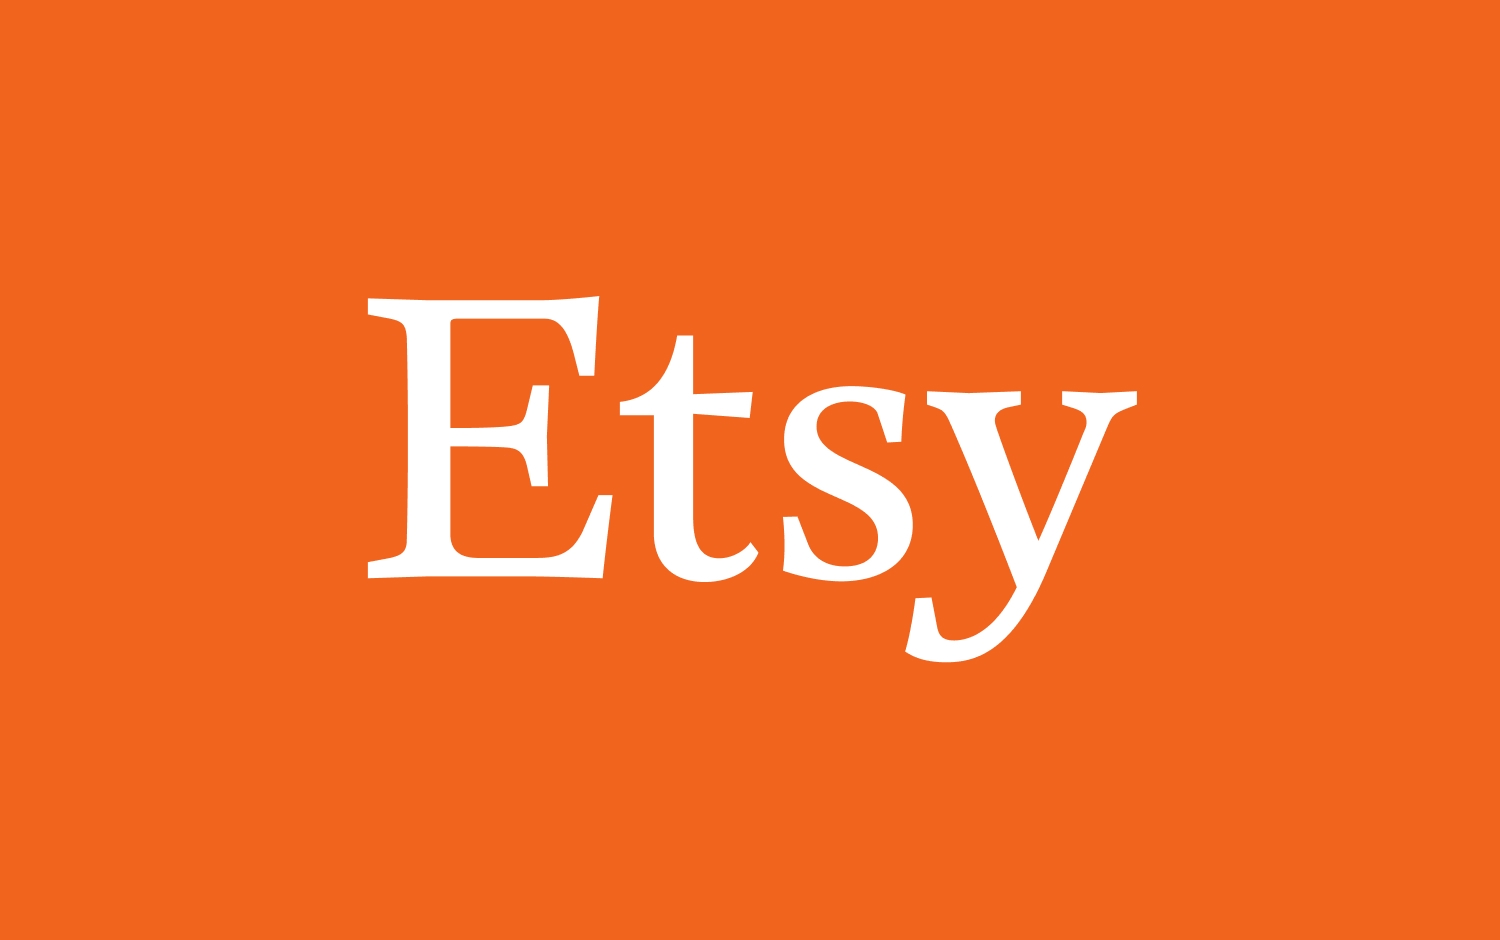 Etsy logo with white font on an orange background